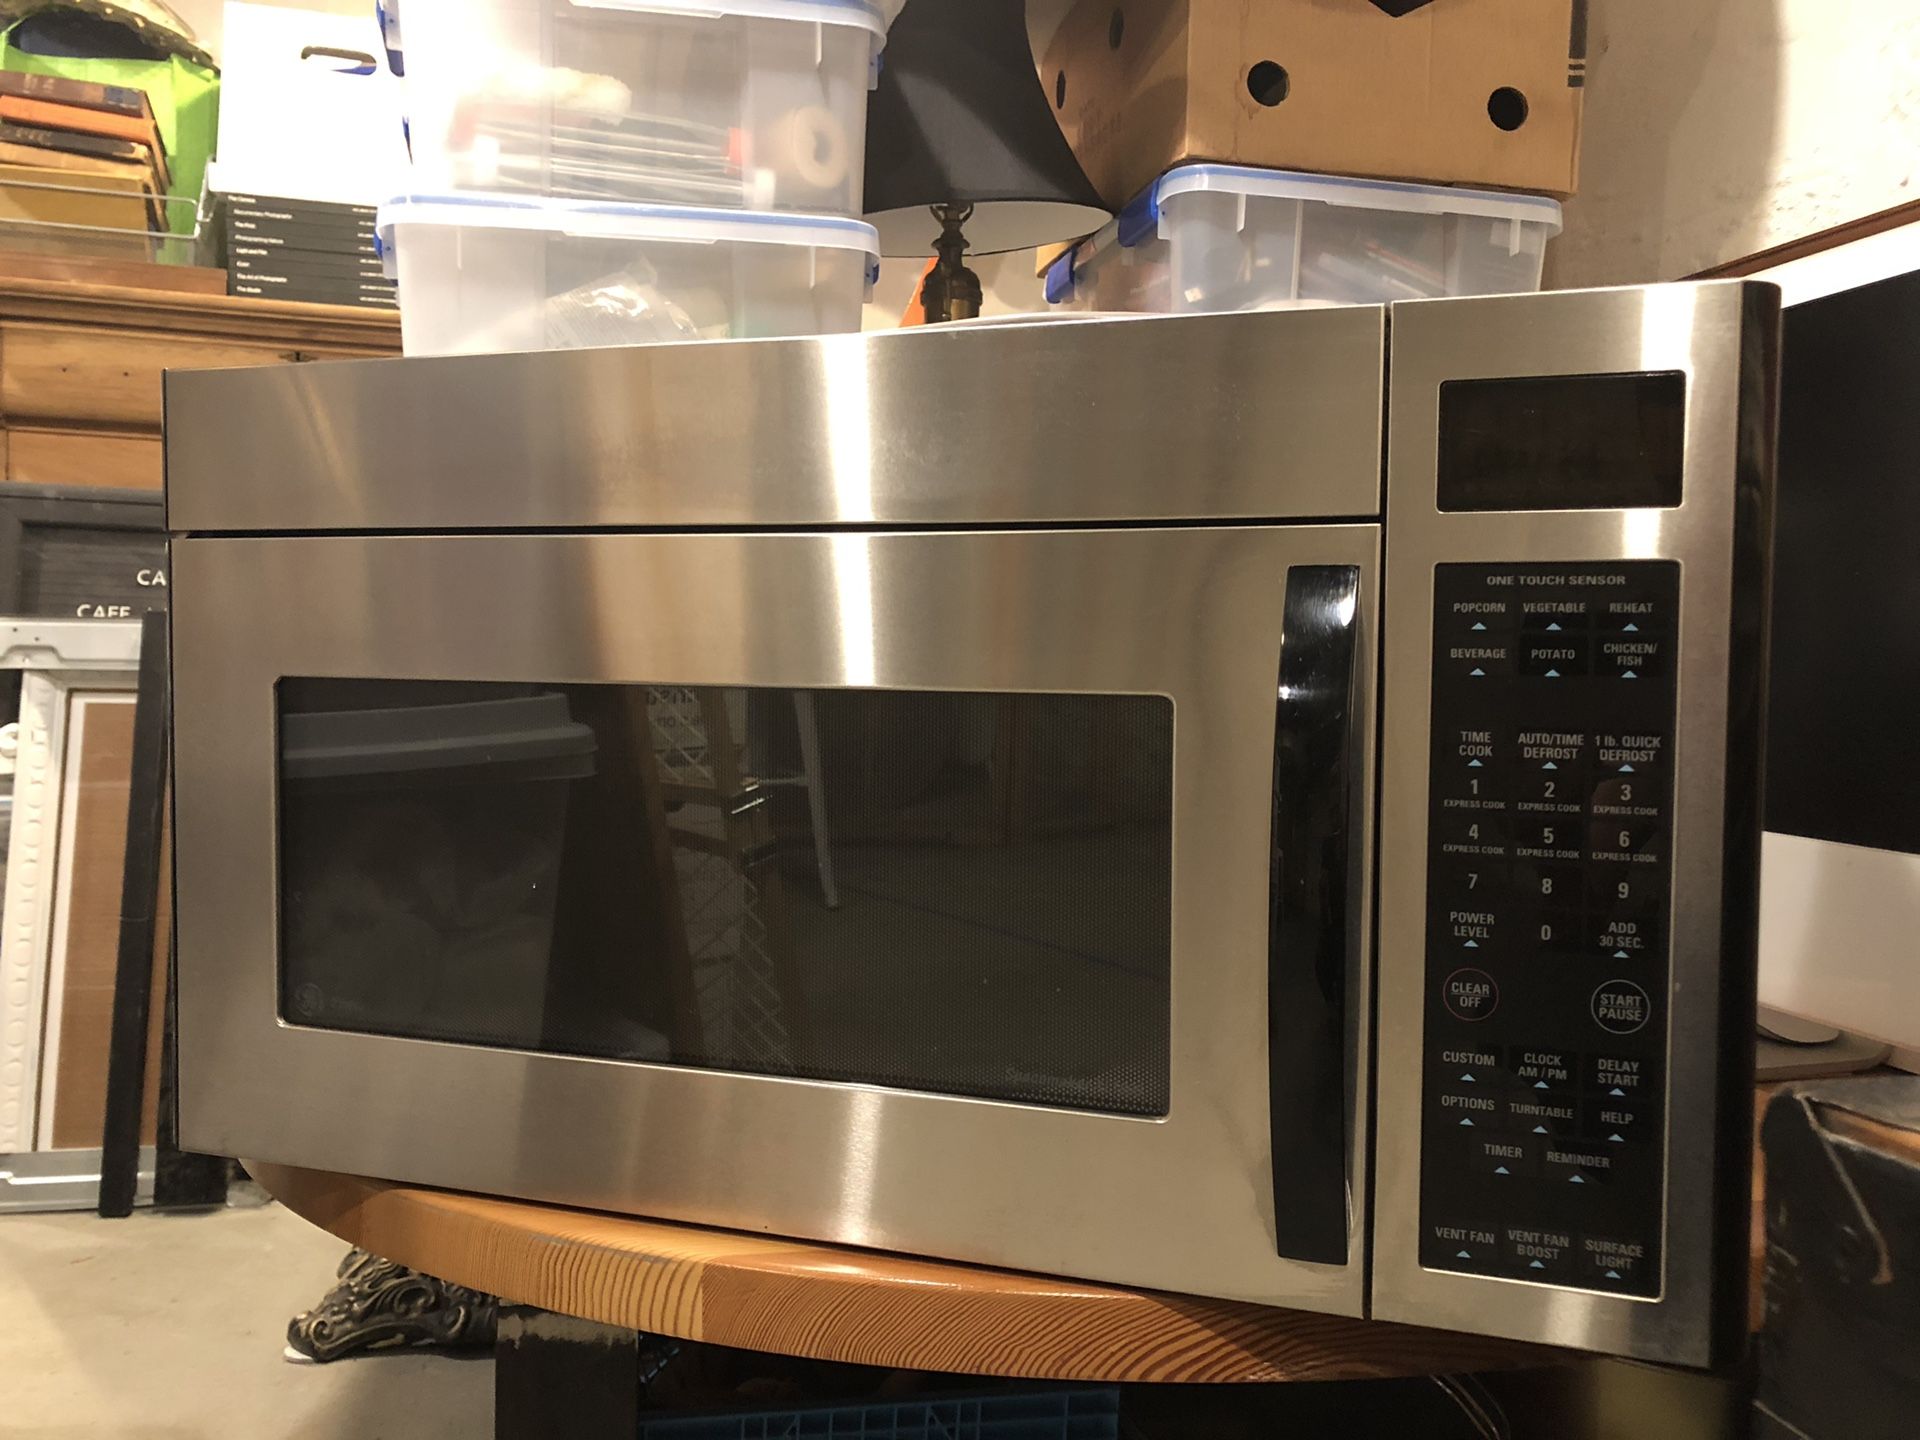 Microwave Oven Range